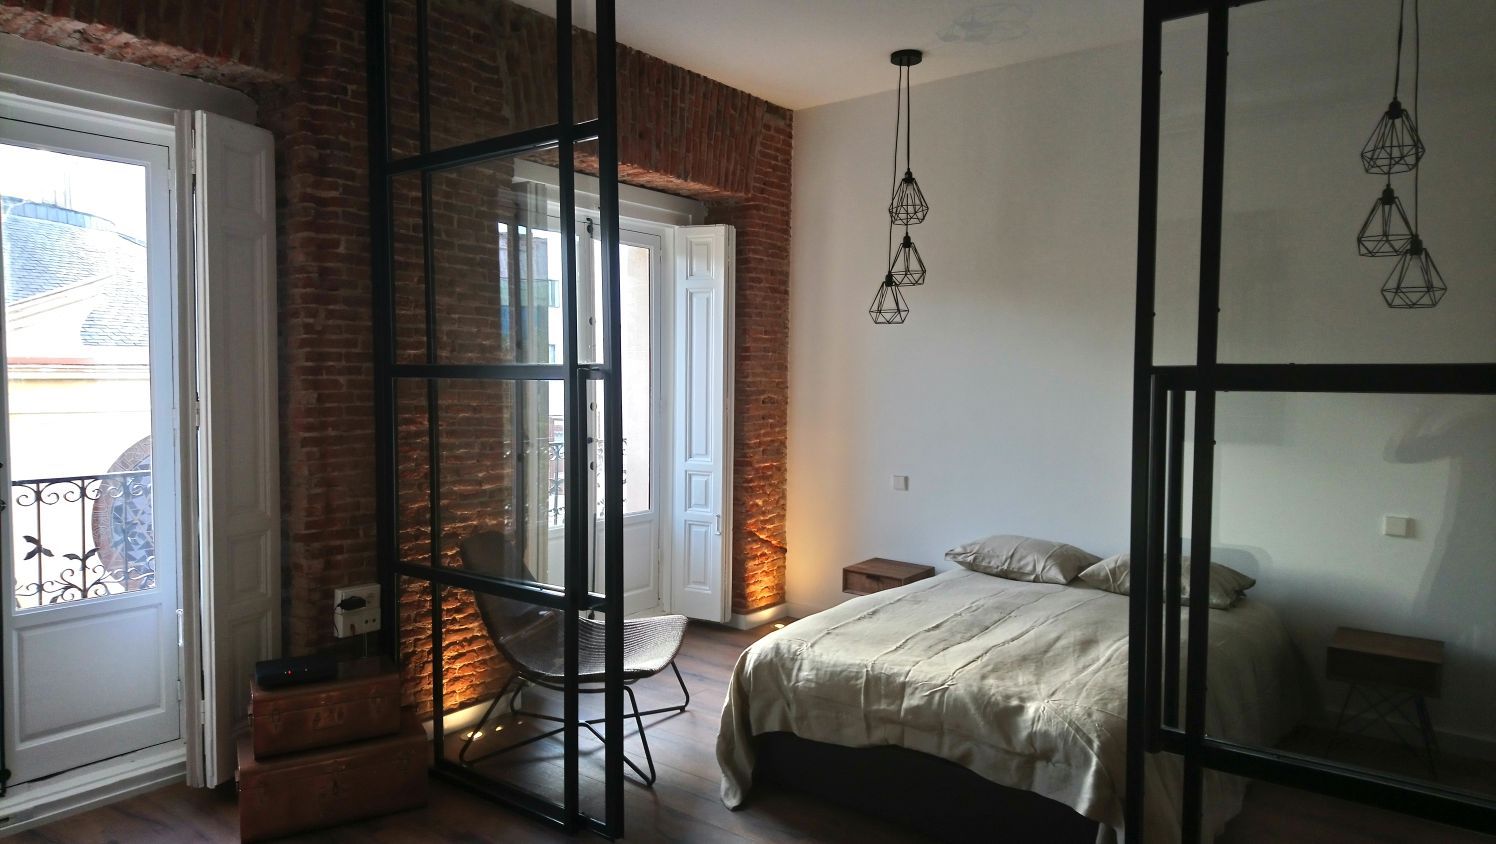 Apartamento turístico en La Latina, GARMA+ZAMBRANO Arquitectura GARMA+ZAMBRANO Arquitectura Camera da letto in stile industriale